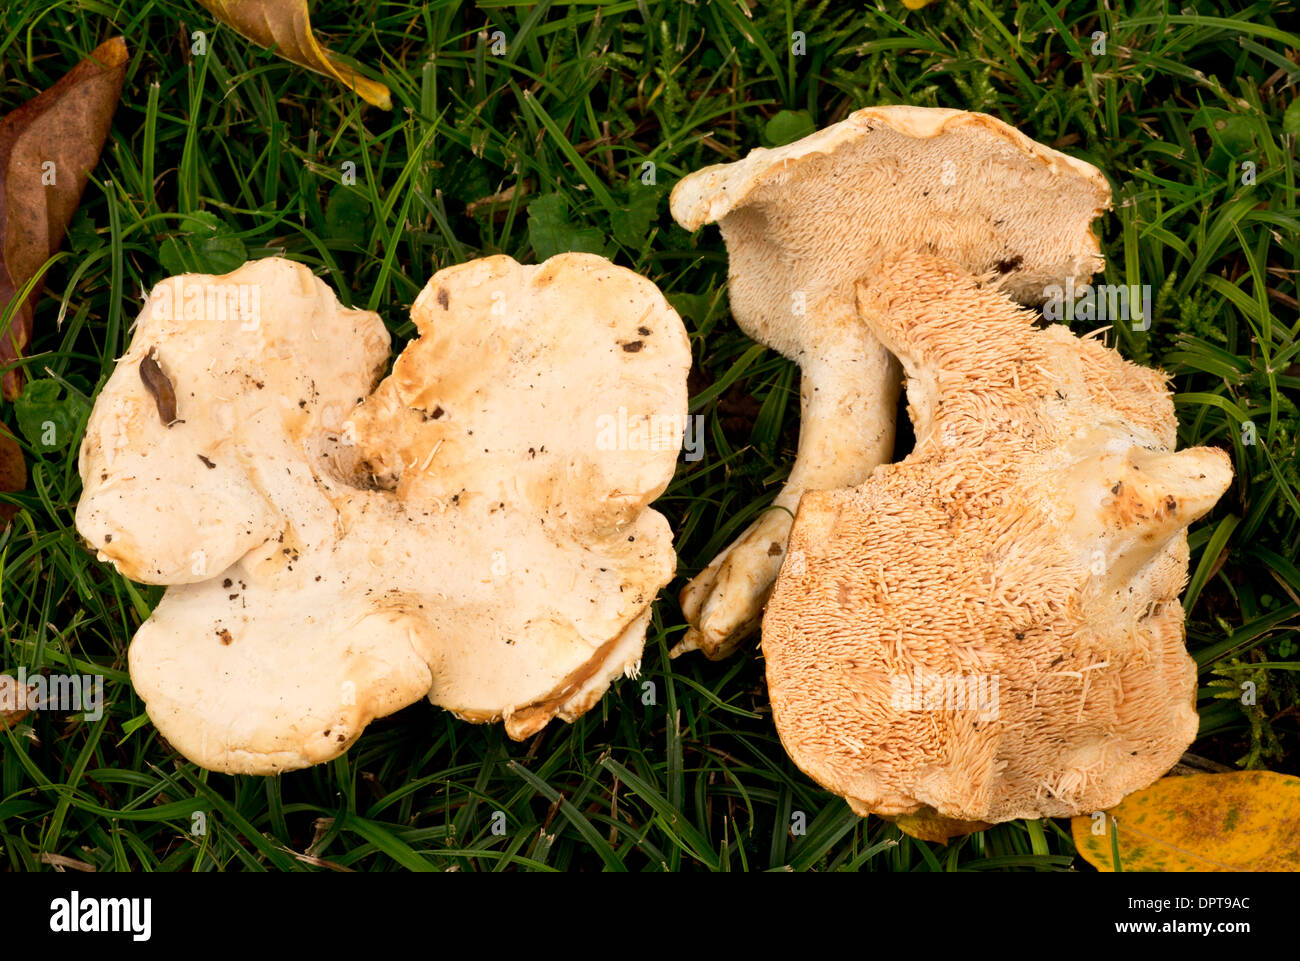 Wood hedgehog / hedgehog mushroom, Hydnum repandum - edible mushroom, collected for sale. Sold as Pied-de-Mouton. France Stock Photo